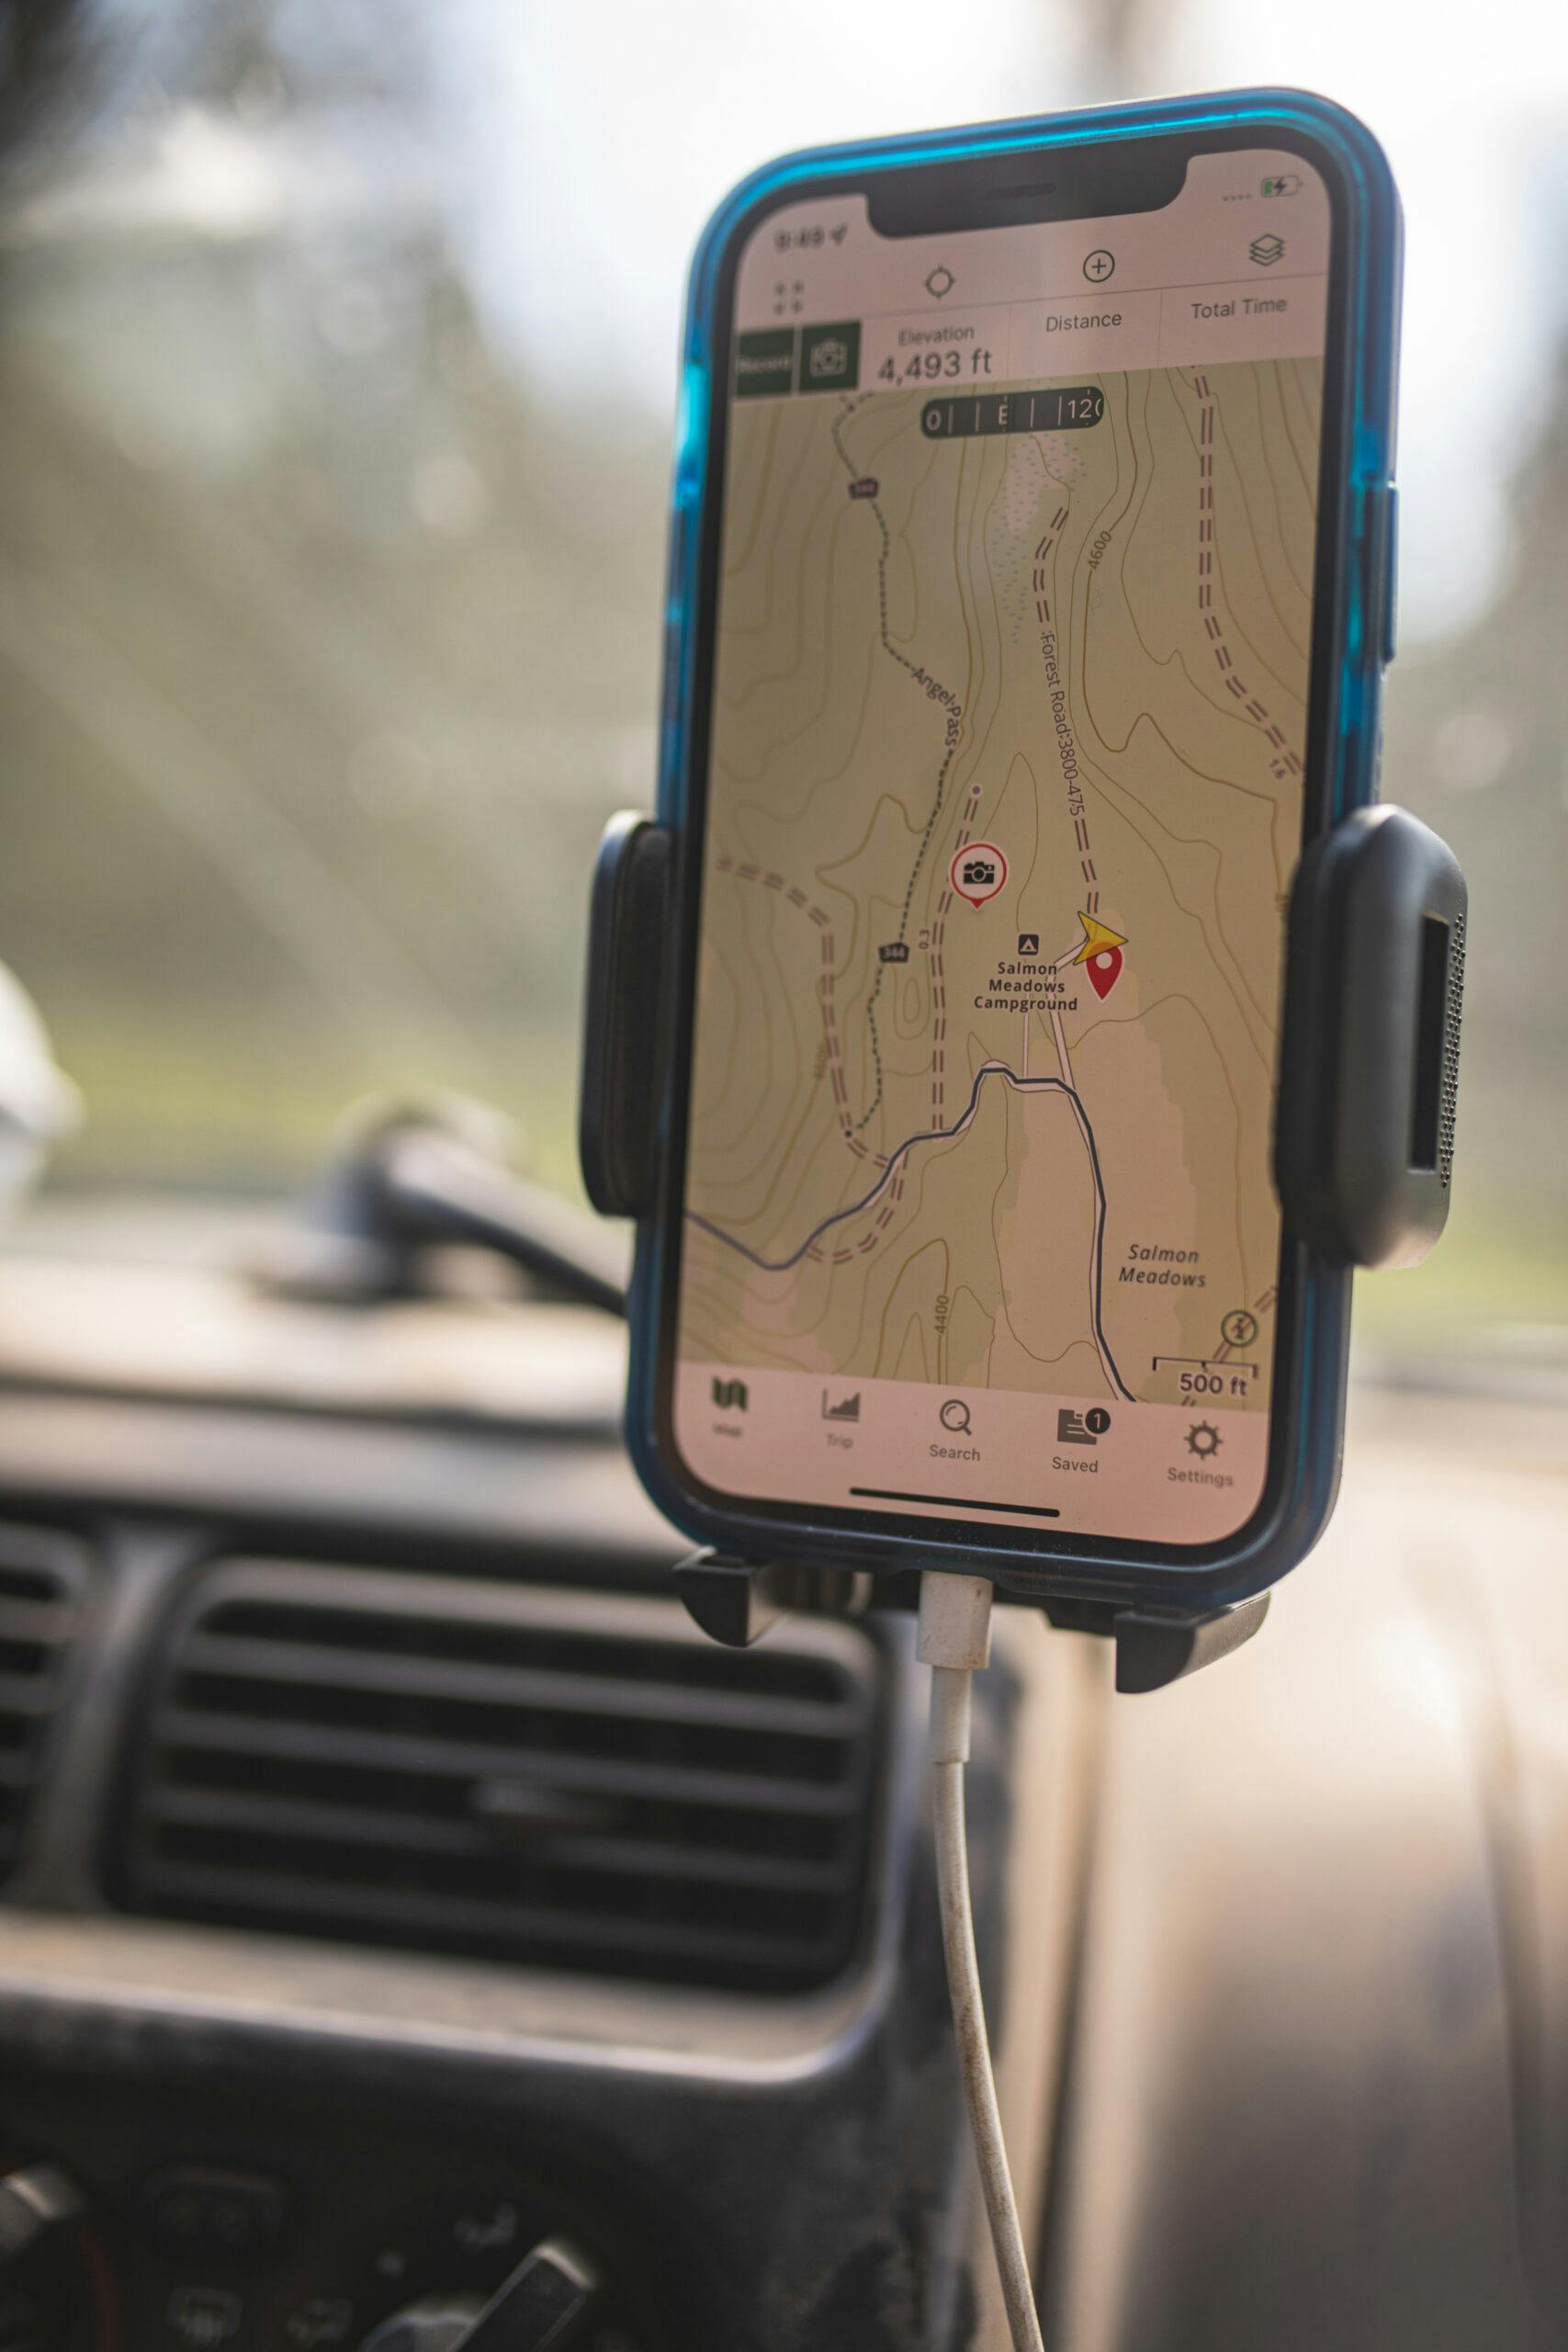 WABDR Nissan Xterra off-road adventure phone gps